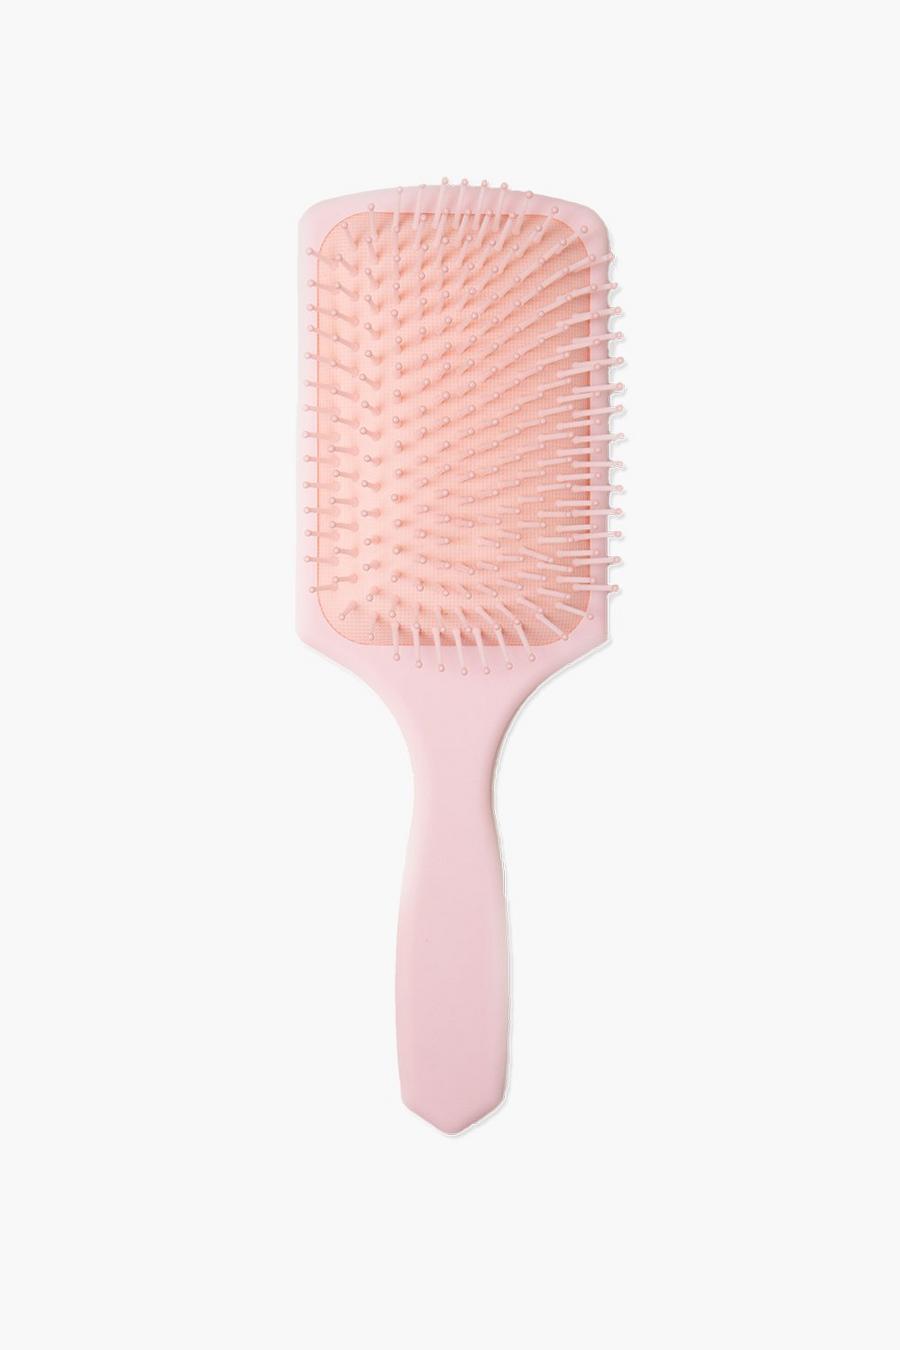 Cepillo rectangular para el pelo de Lullabellz, Pink image number 1